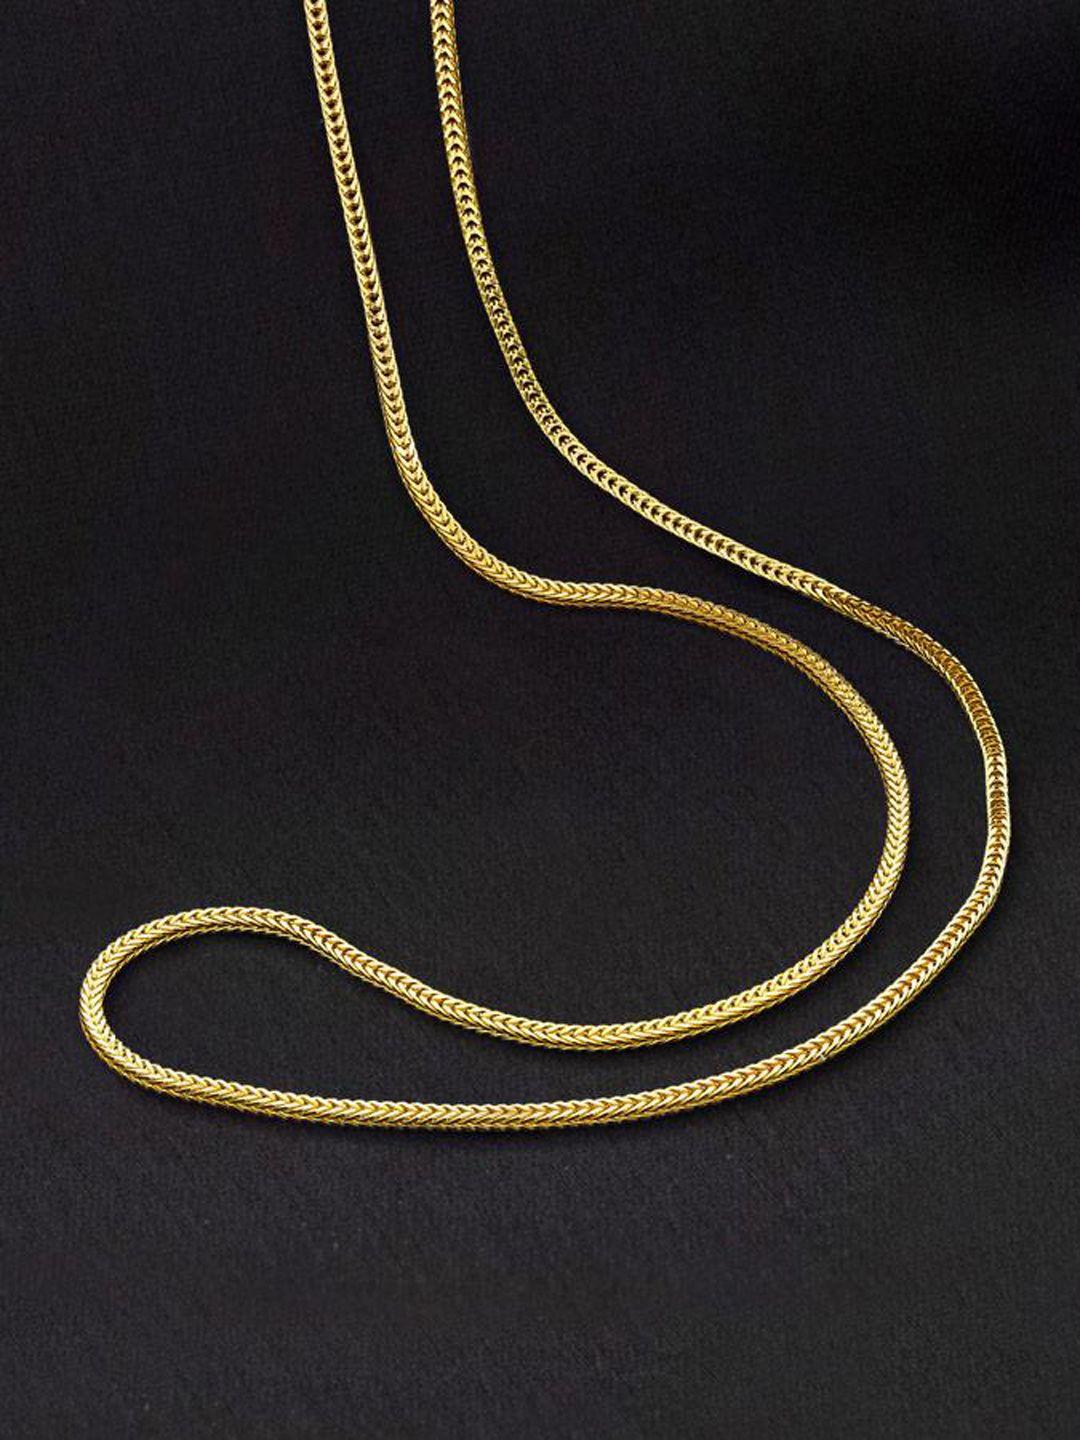 candere a kalyan jewellers company 22kt bis hallmark gold chain-5.46gm